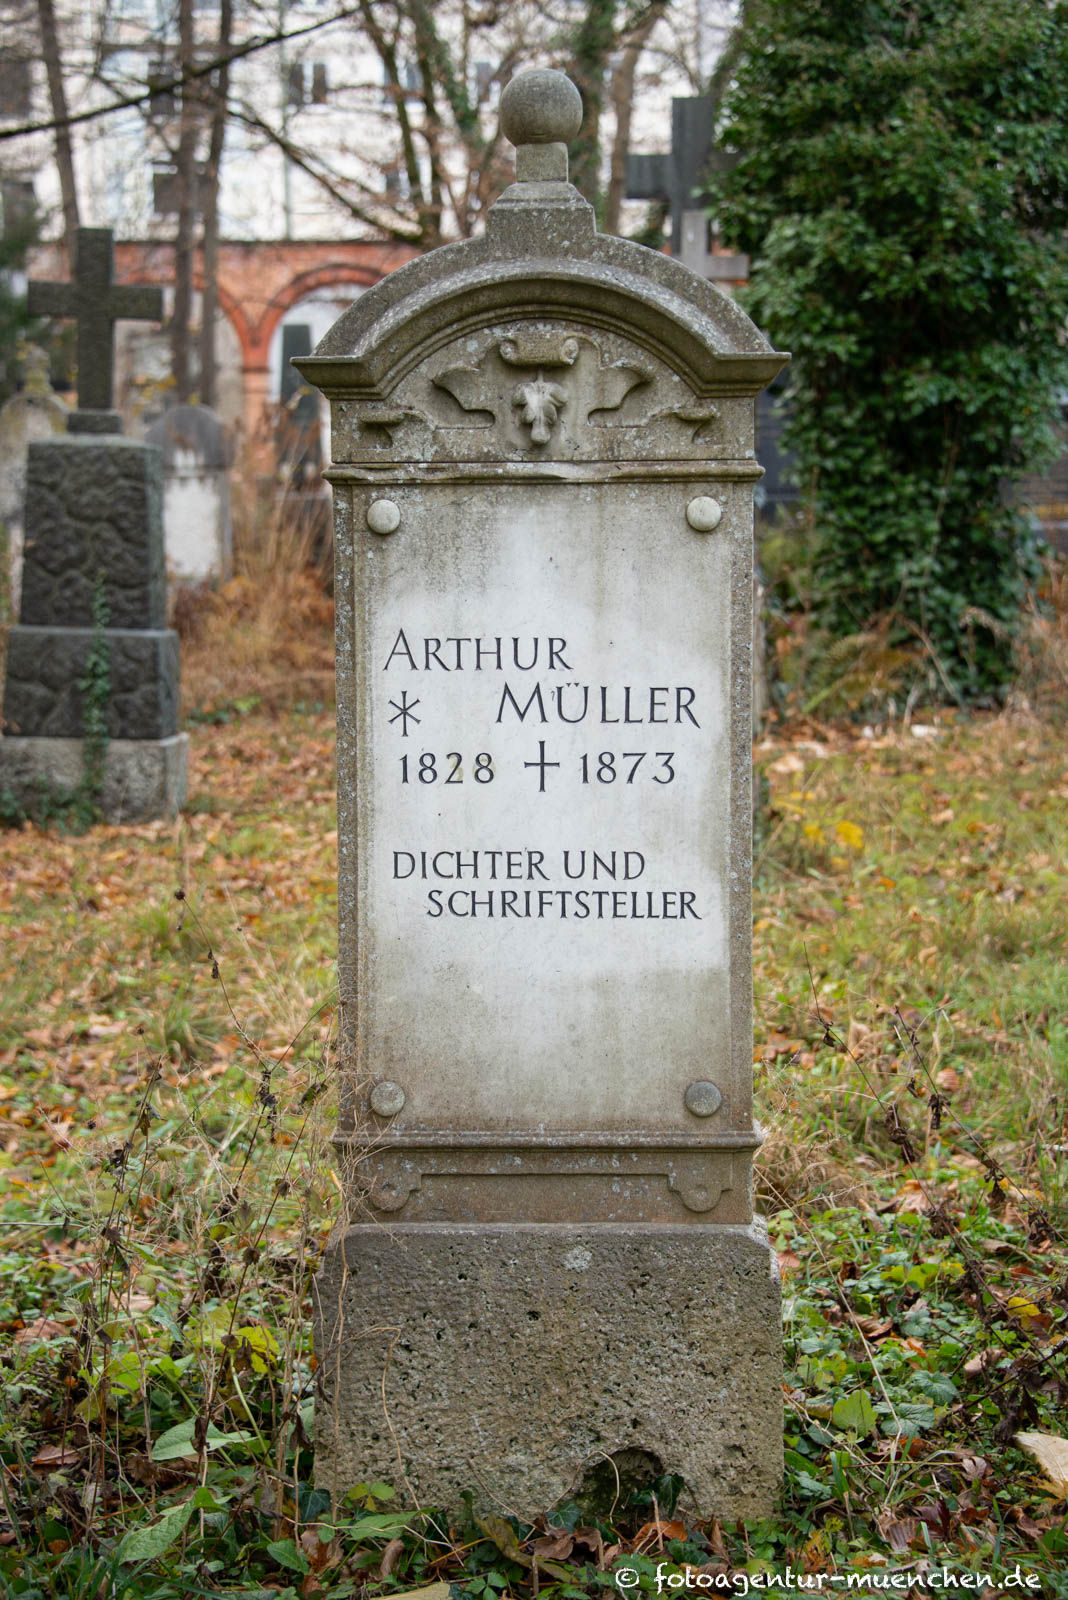 Arthur Müller